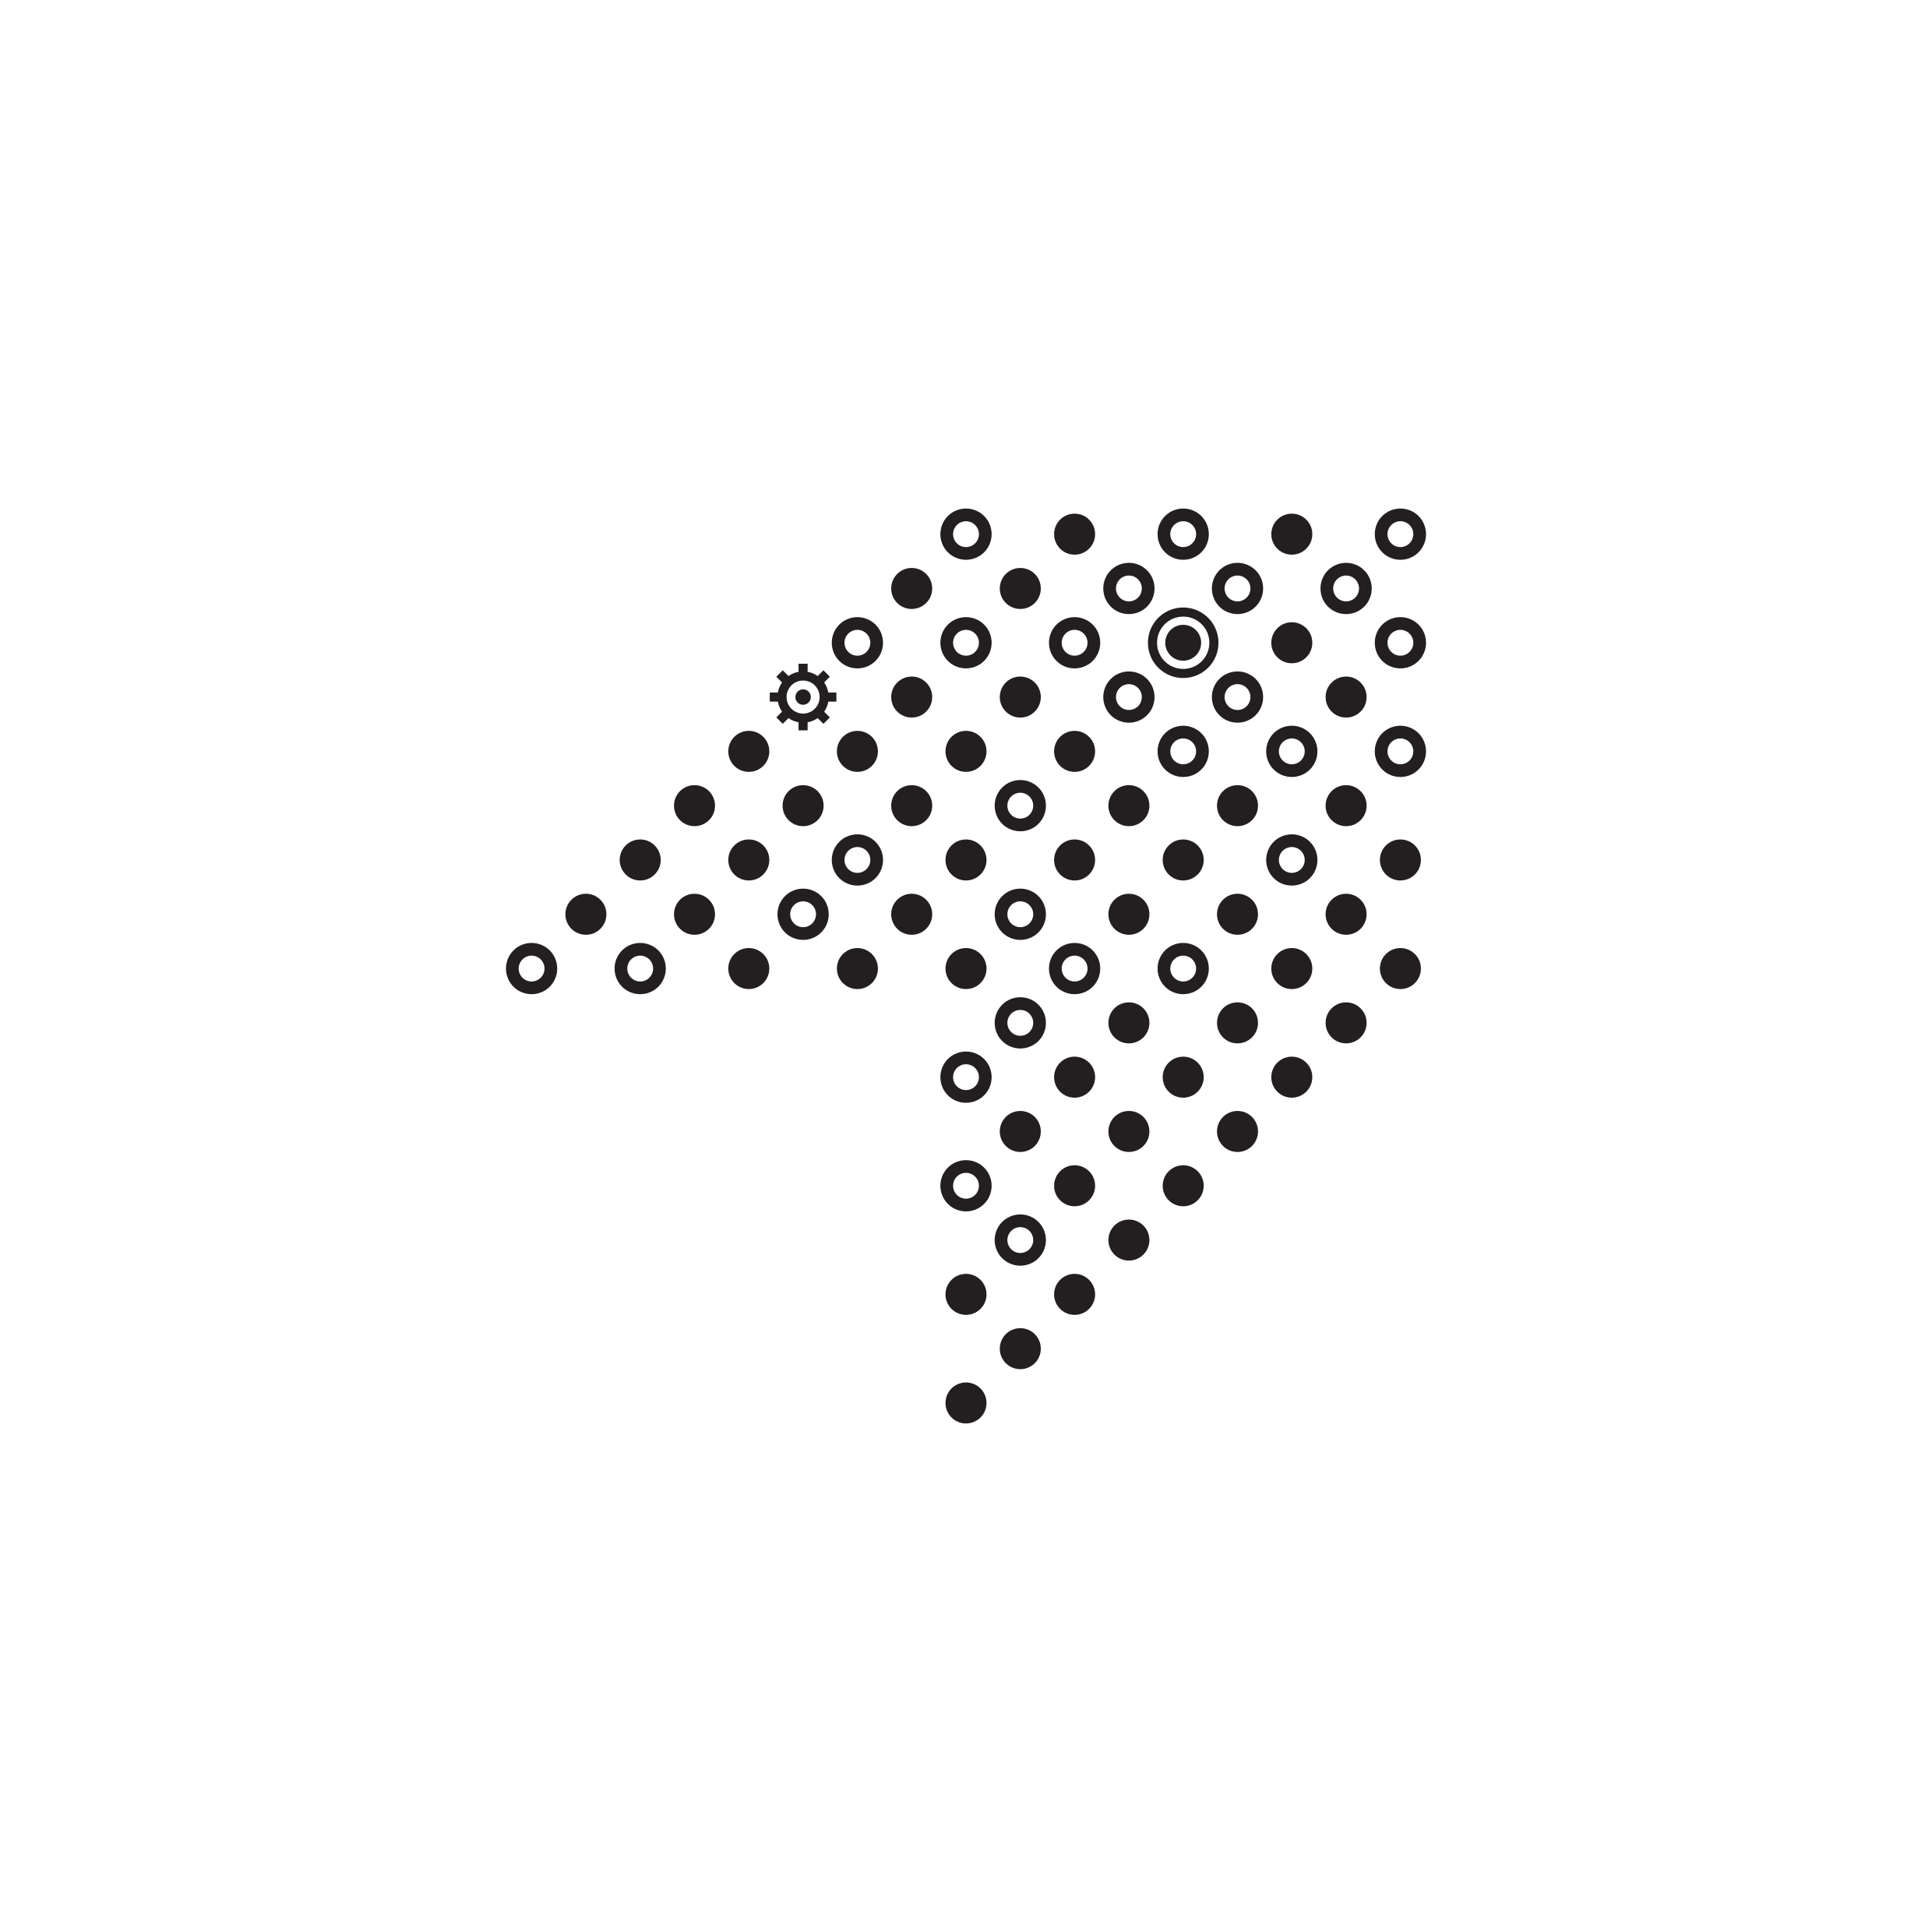 CultureCIVIC-logo-Esen-Karol-2